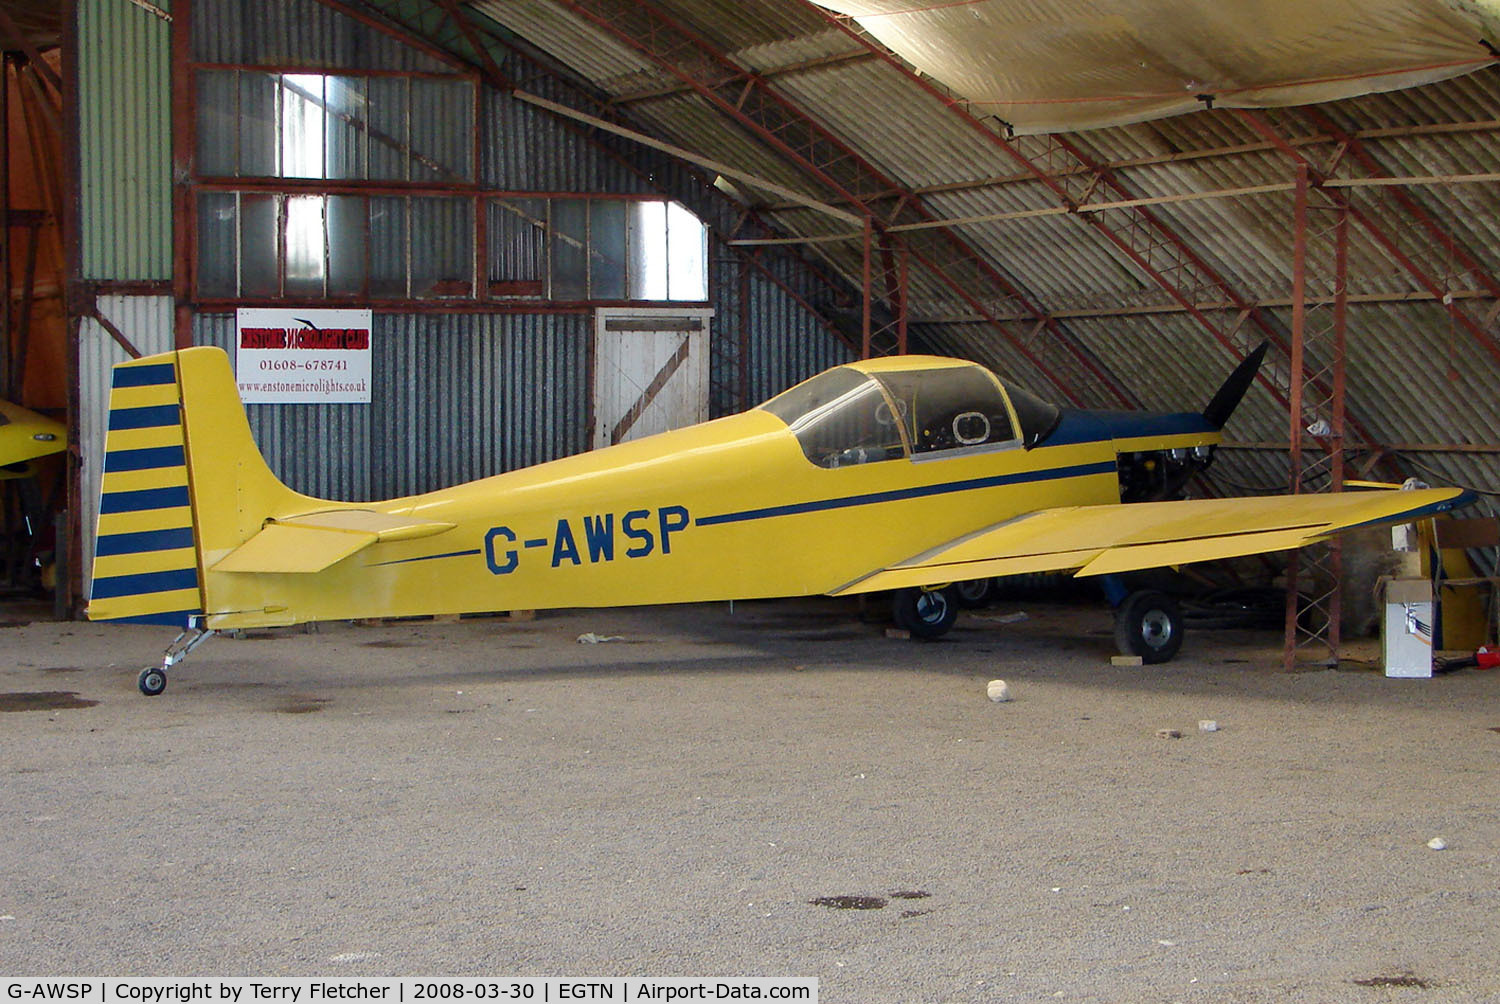 G-AWSP, 1969 Druine D.62B Condor C/N RAE/634, One aircraft at the friendly Enstone Airfield in Oxfordshire